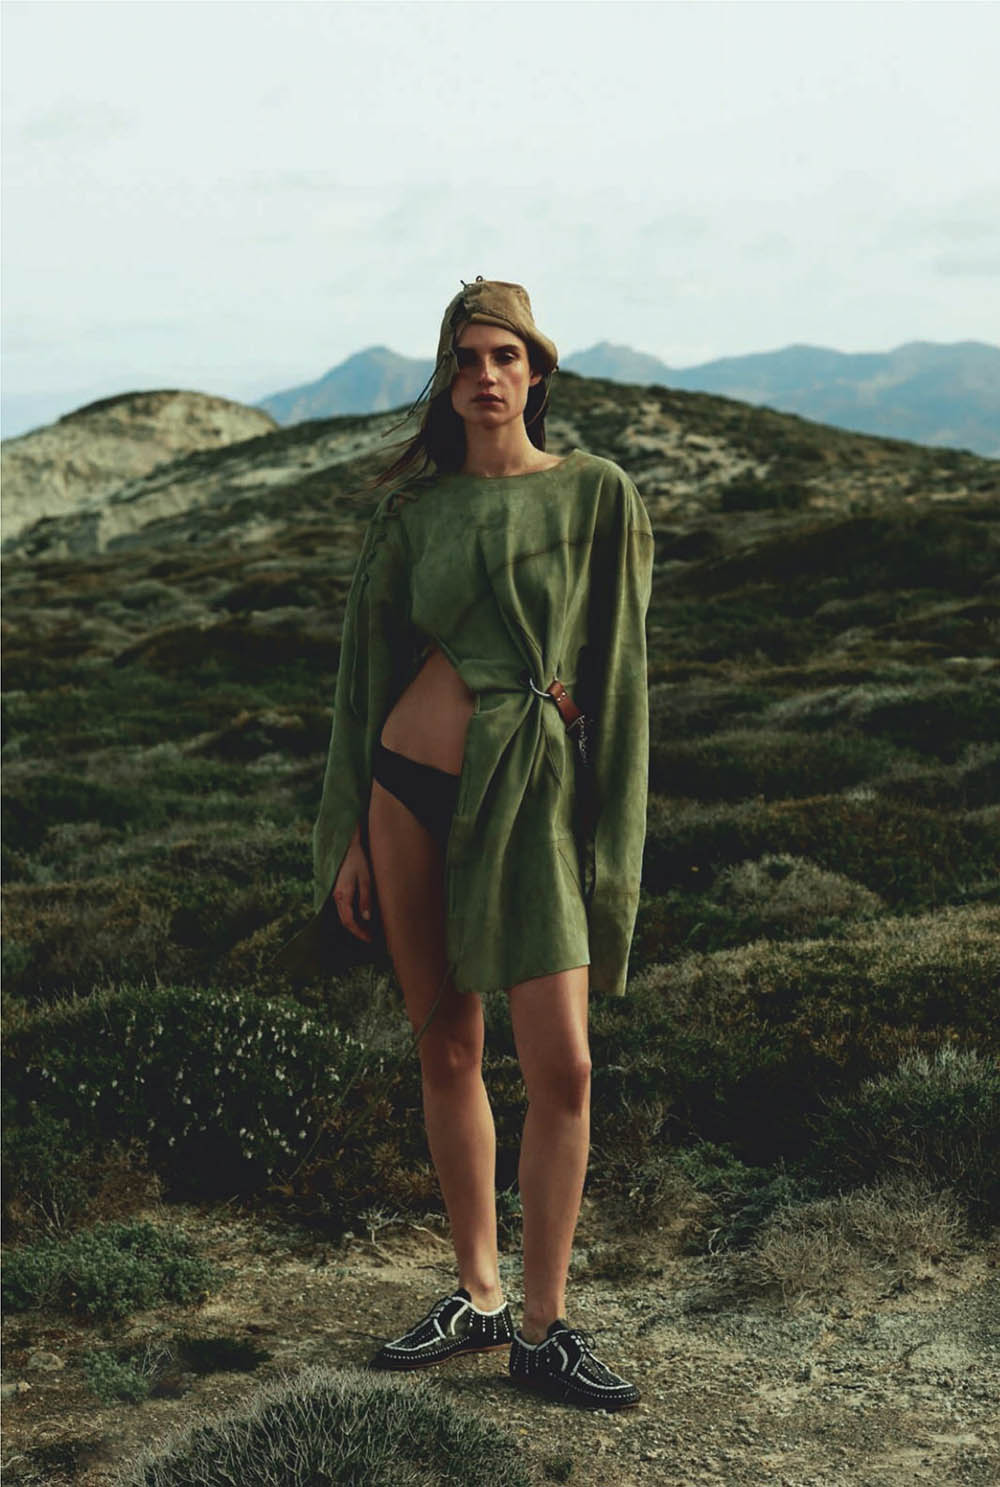 Cate Underwood by Stephan Lisowski for Harper’s Bazaar Spain June 2020